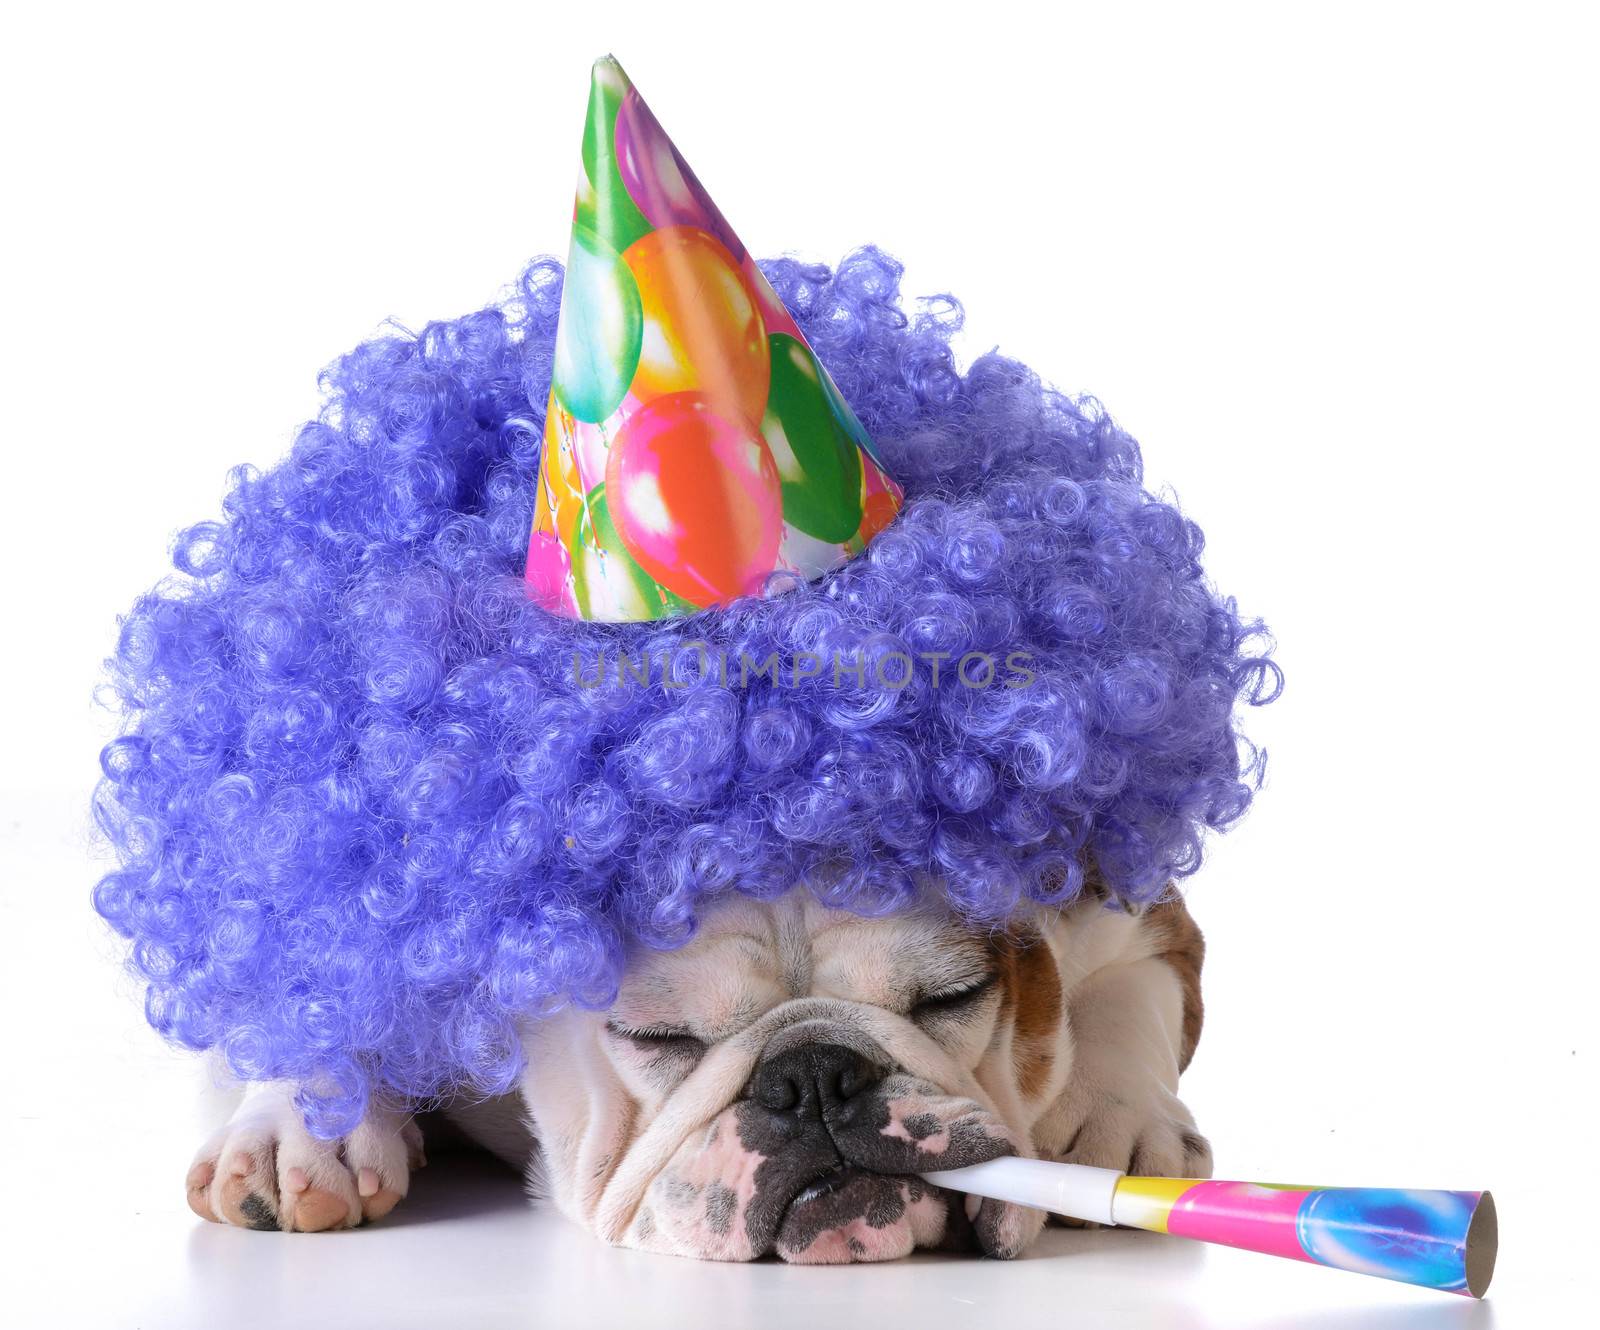 birthday dog - bulldog wearing clown wig and birthday hat on white background